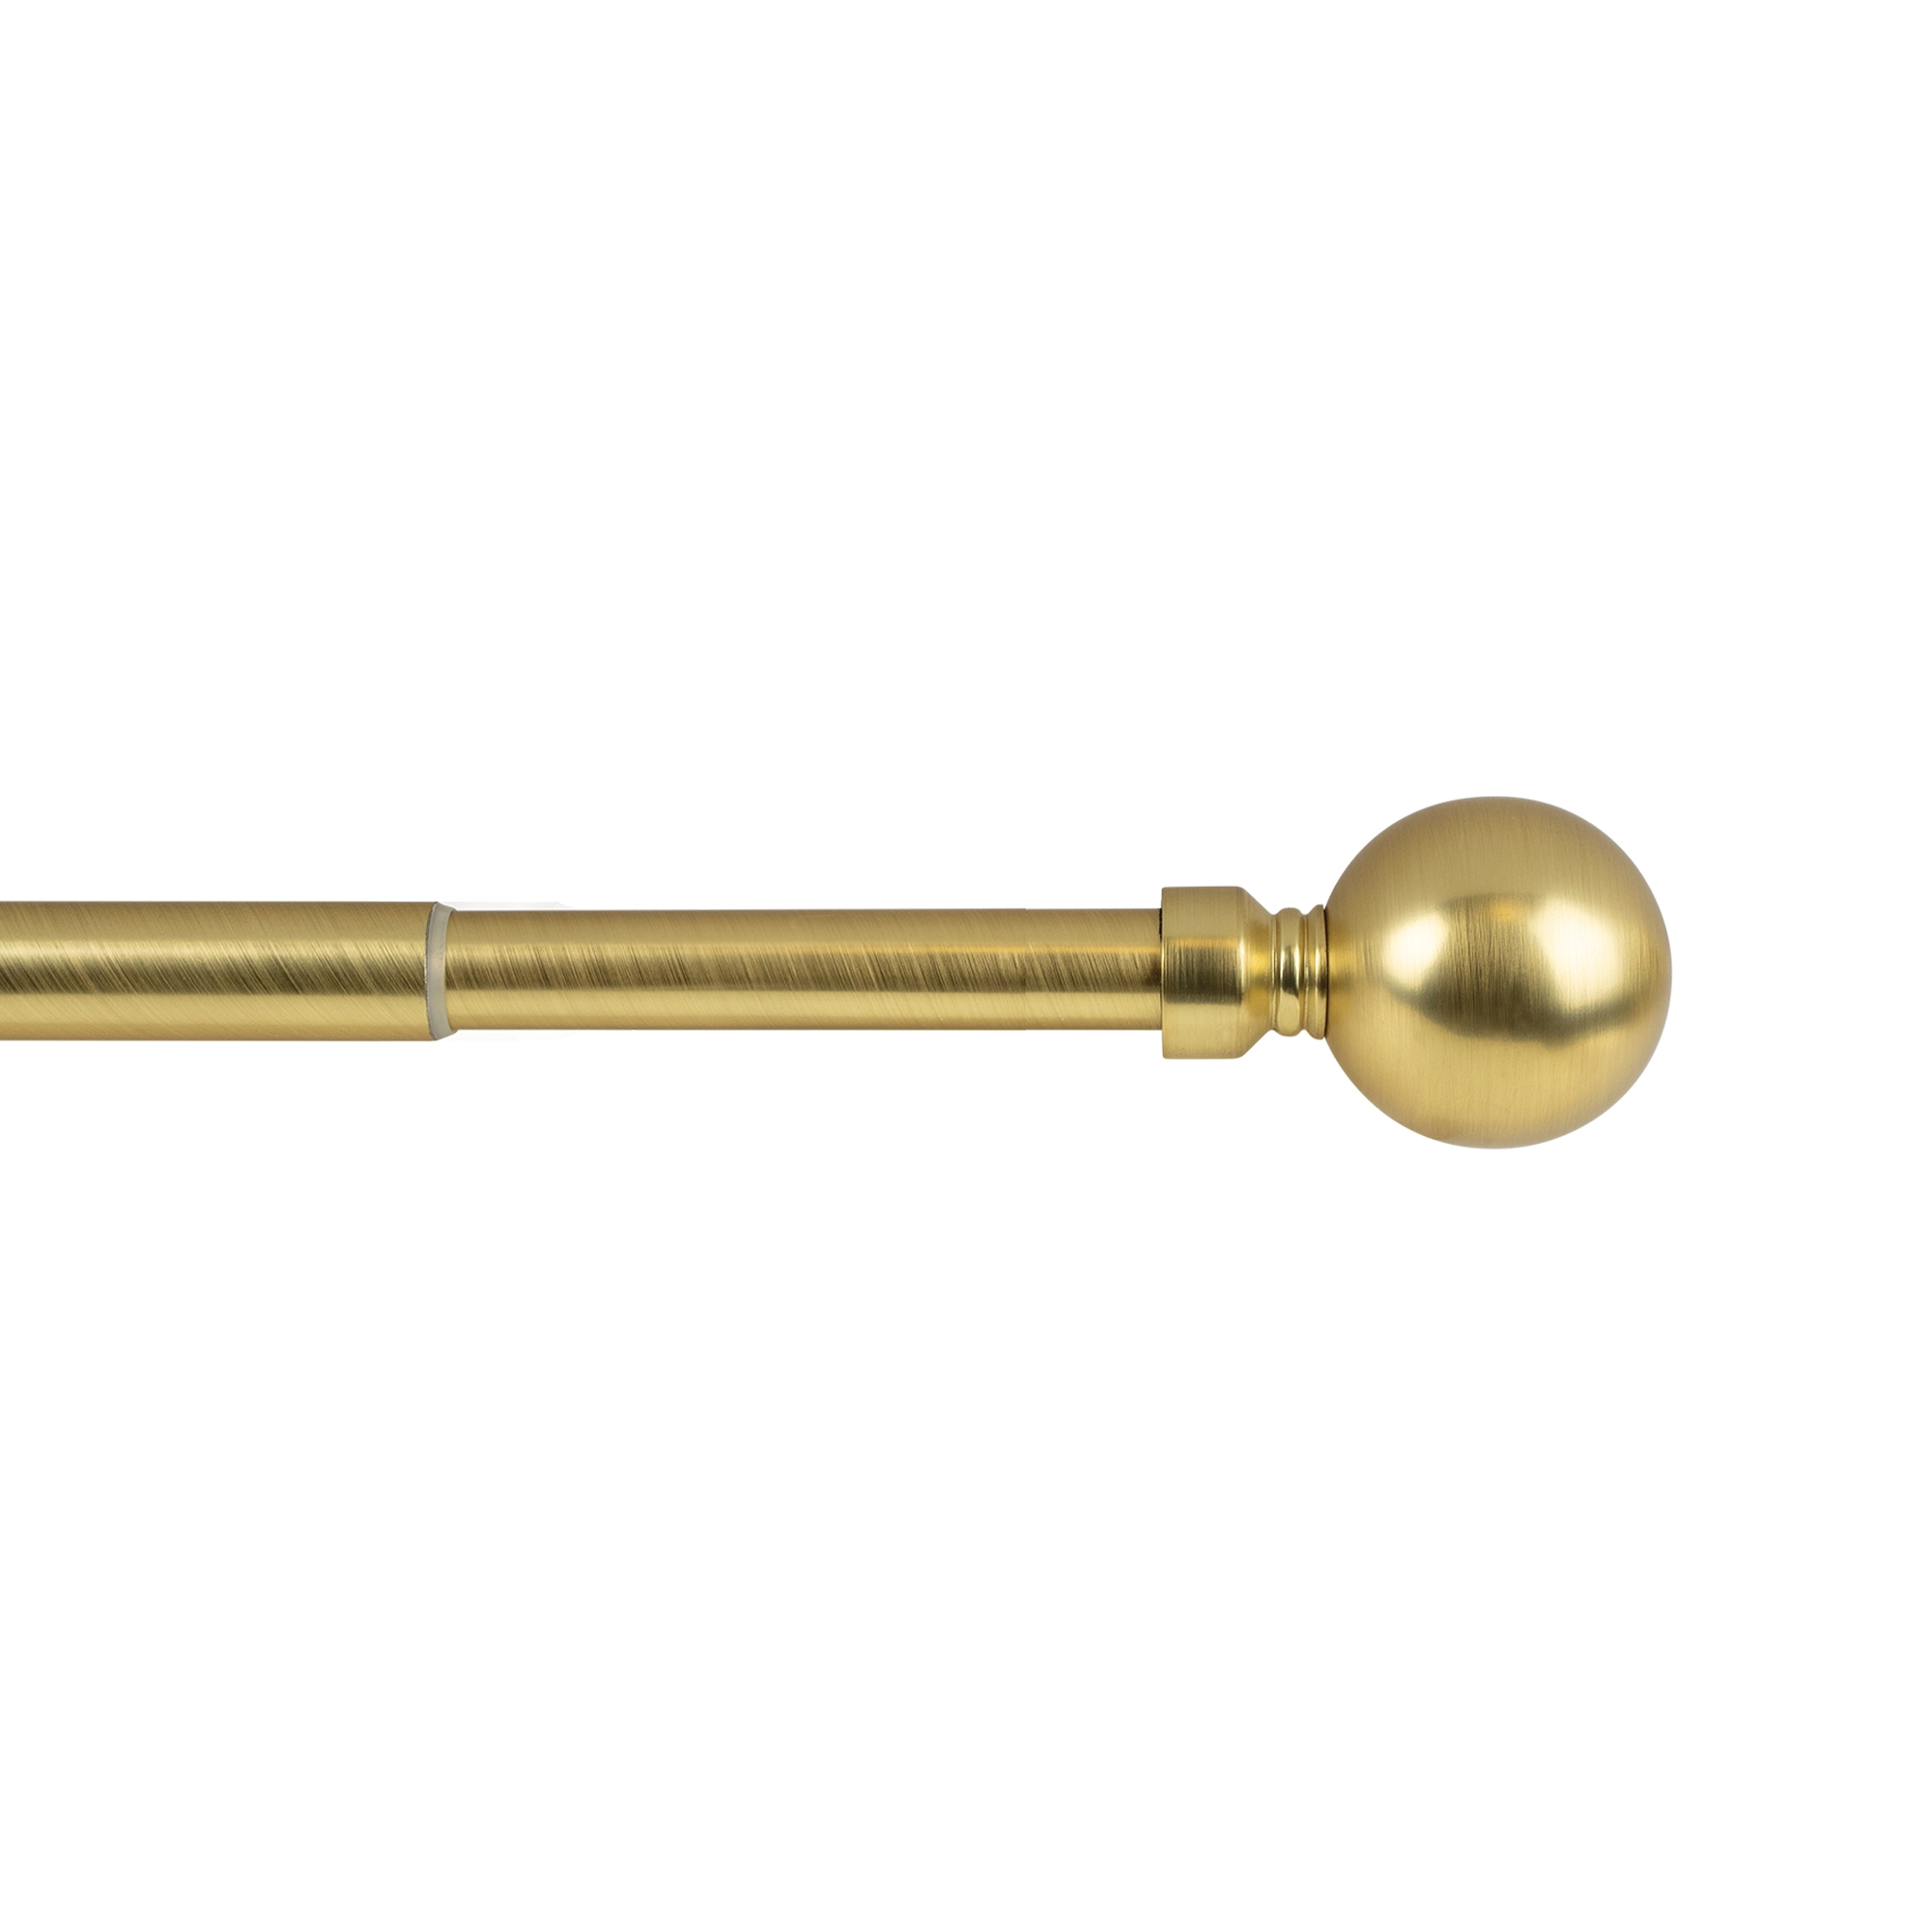 Bastone per tende Kit Sfera 120/210 x Ø 1,9/1,6 cm cromo oro satinato